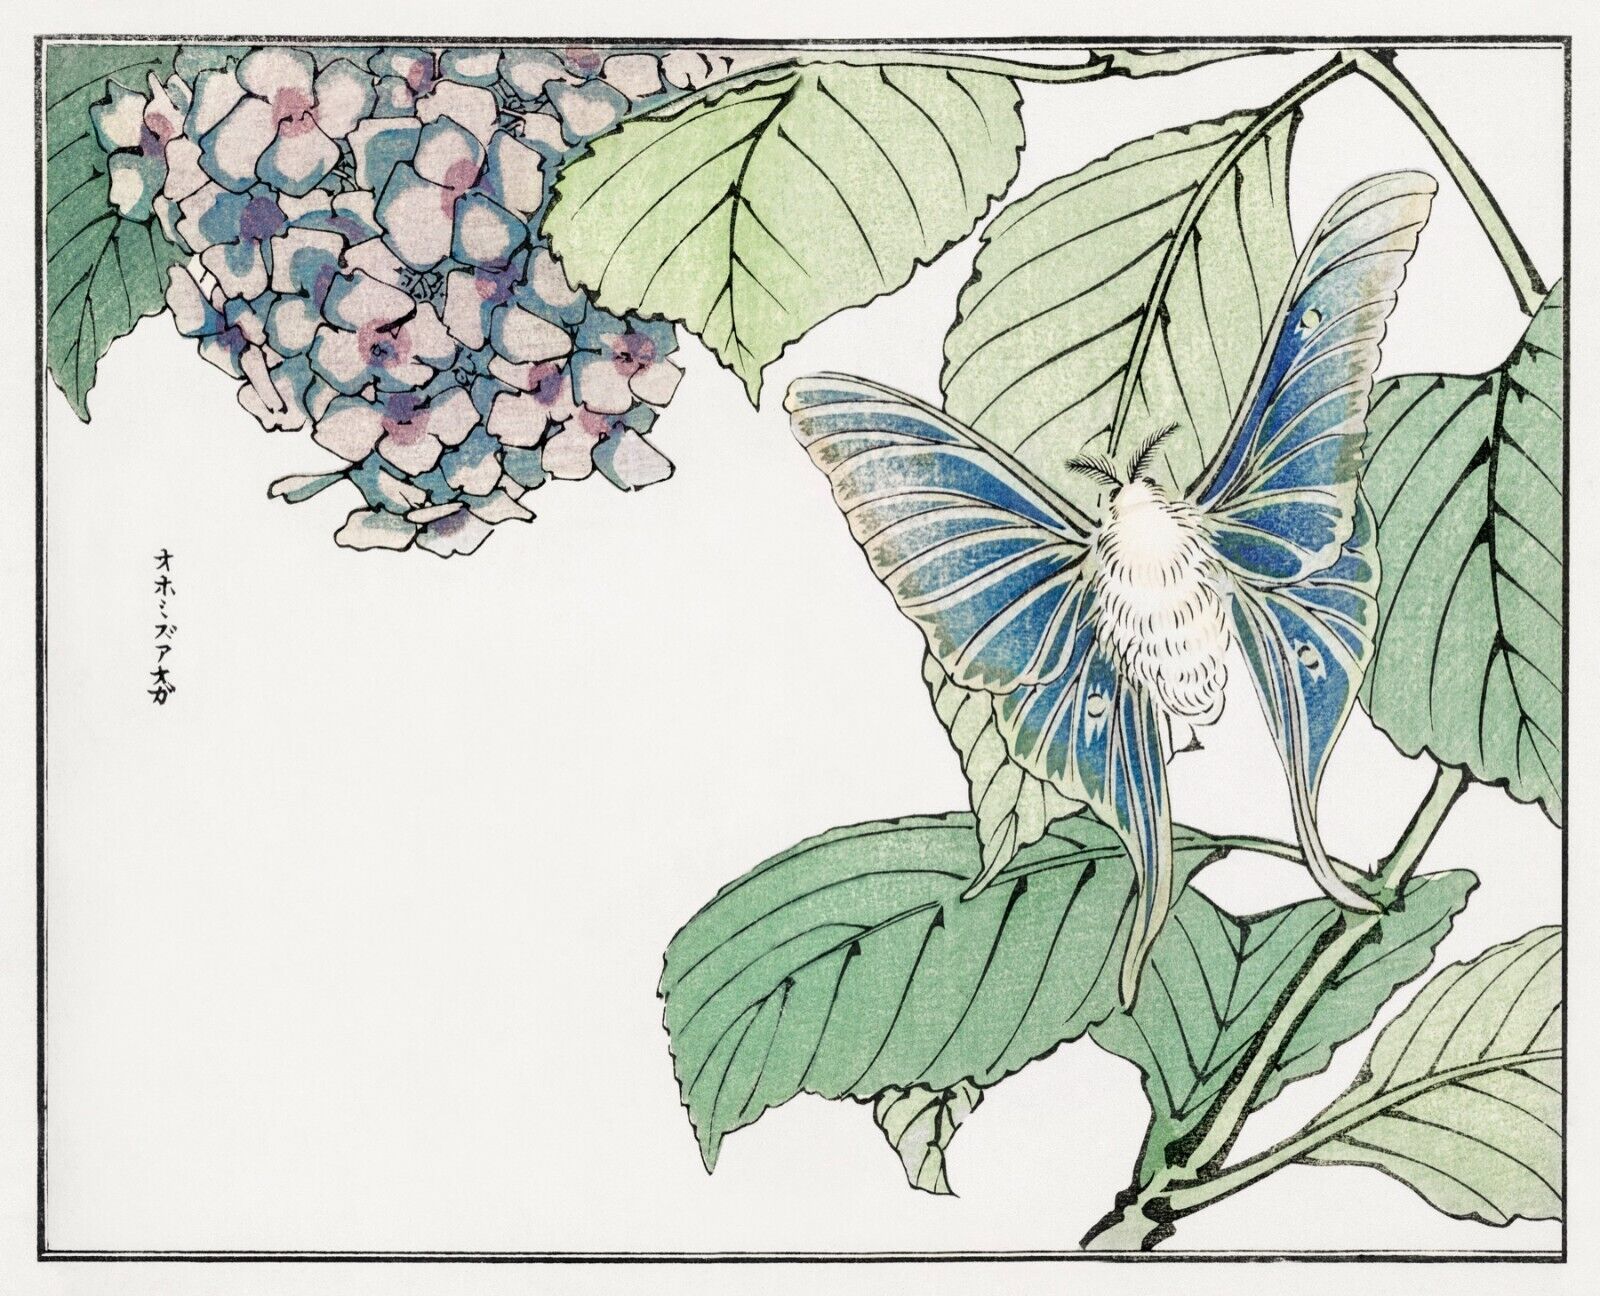 10078.Decor Poster.Room home wall.1910 Japan print.Morimoto Toko art.Floral